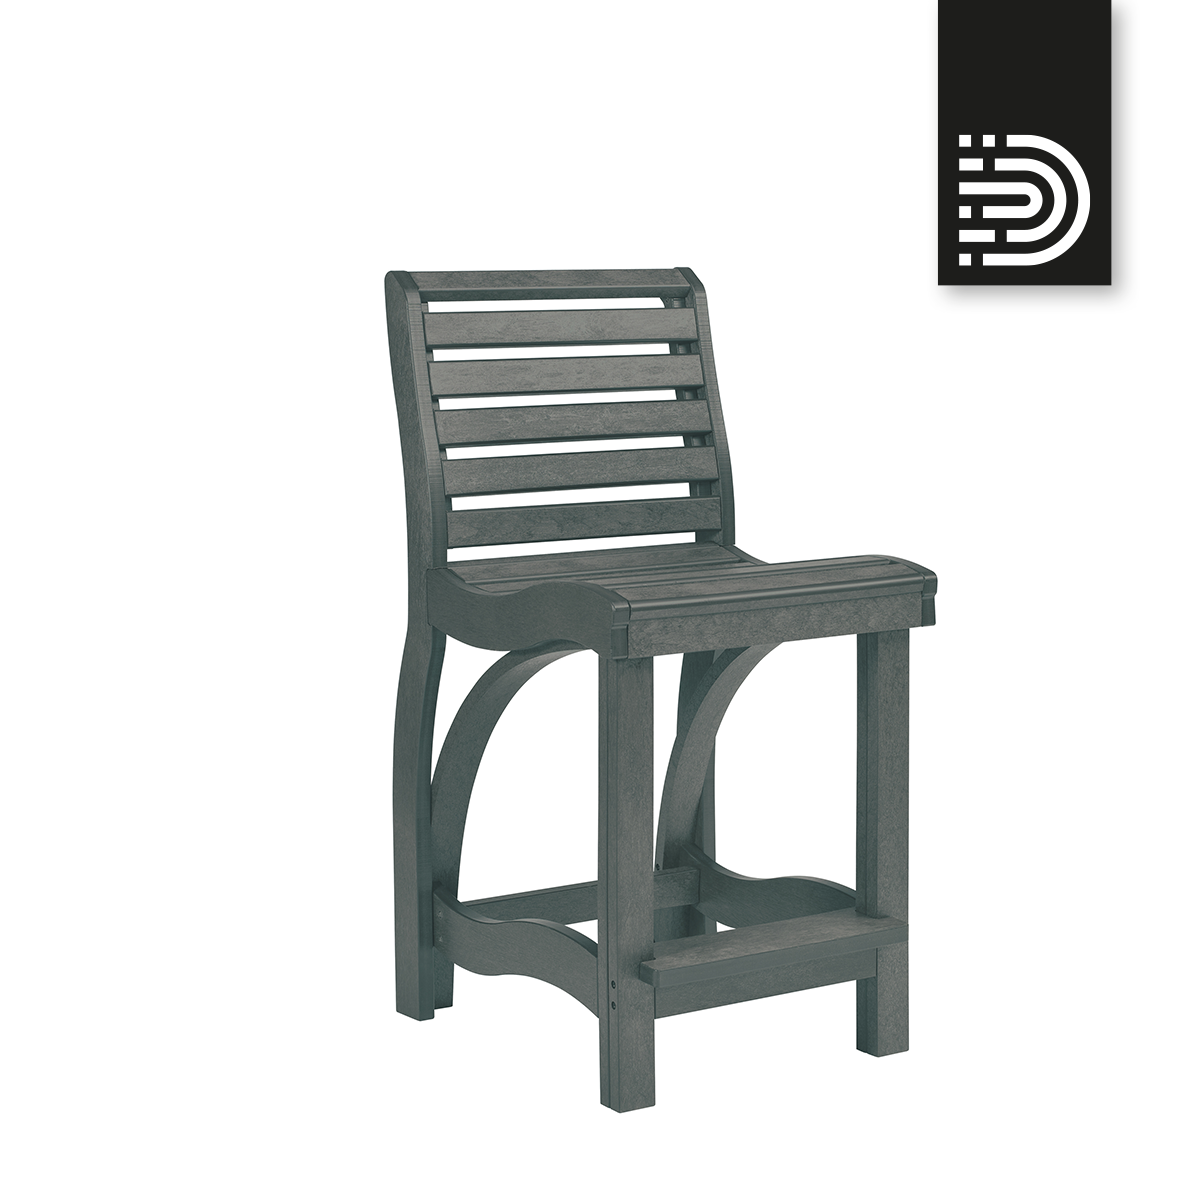 C36 Counter Chair - slate grey 18